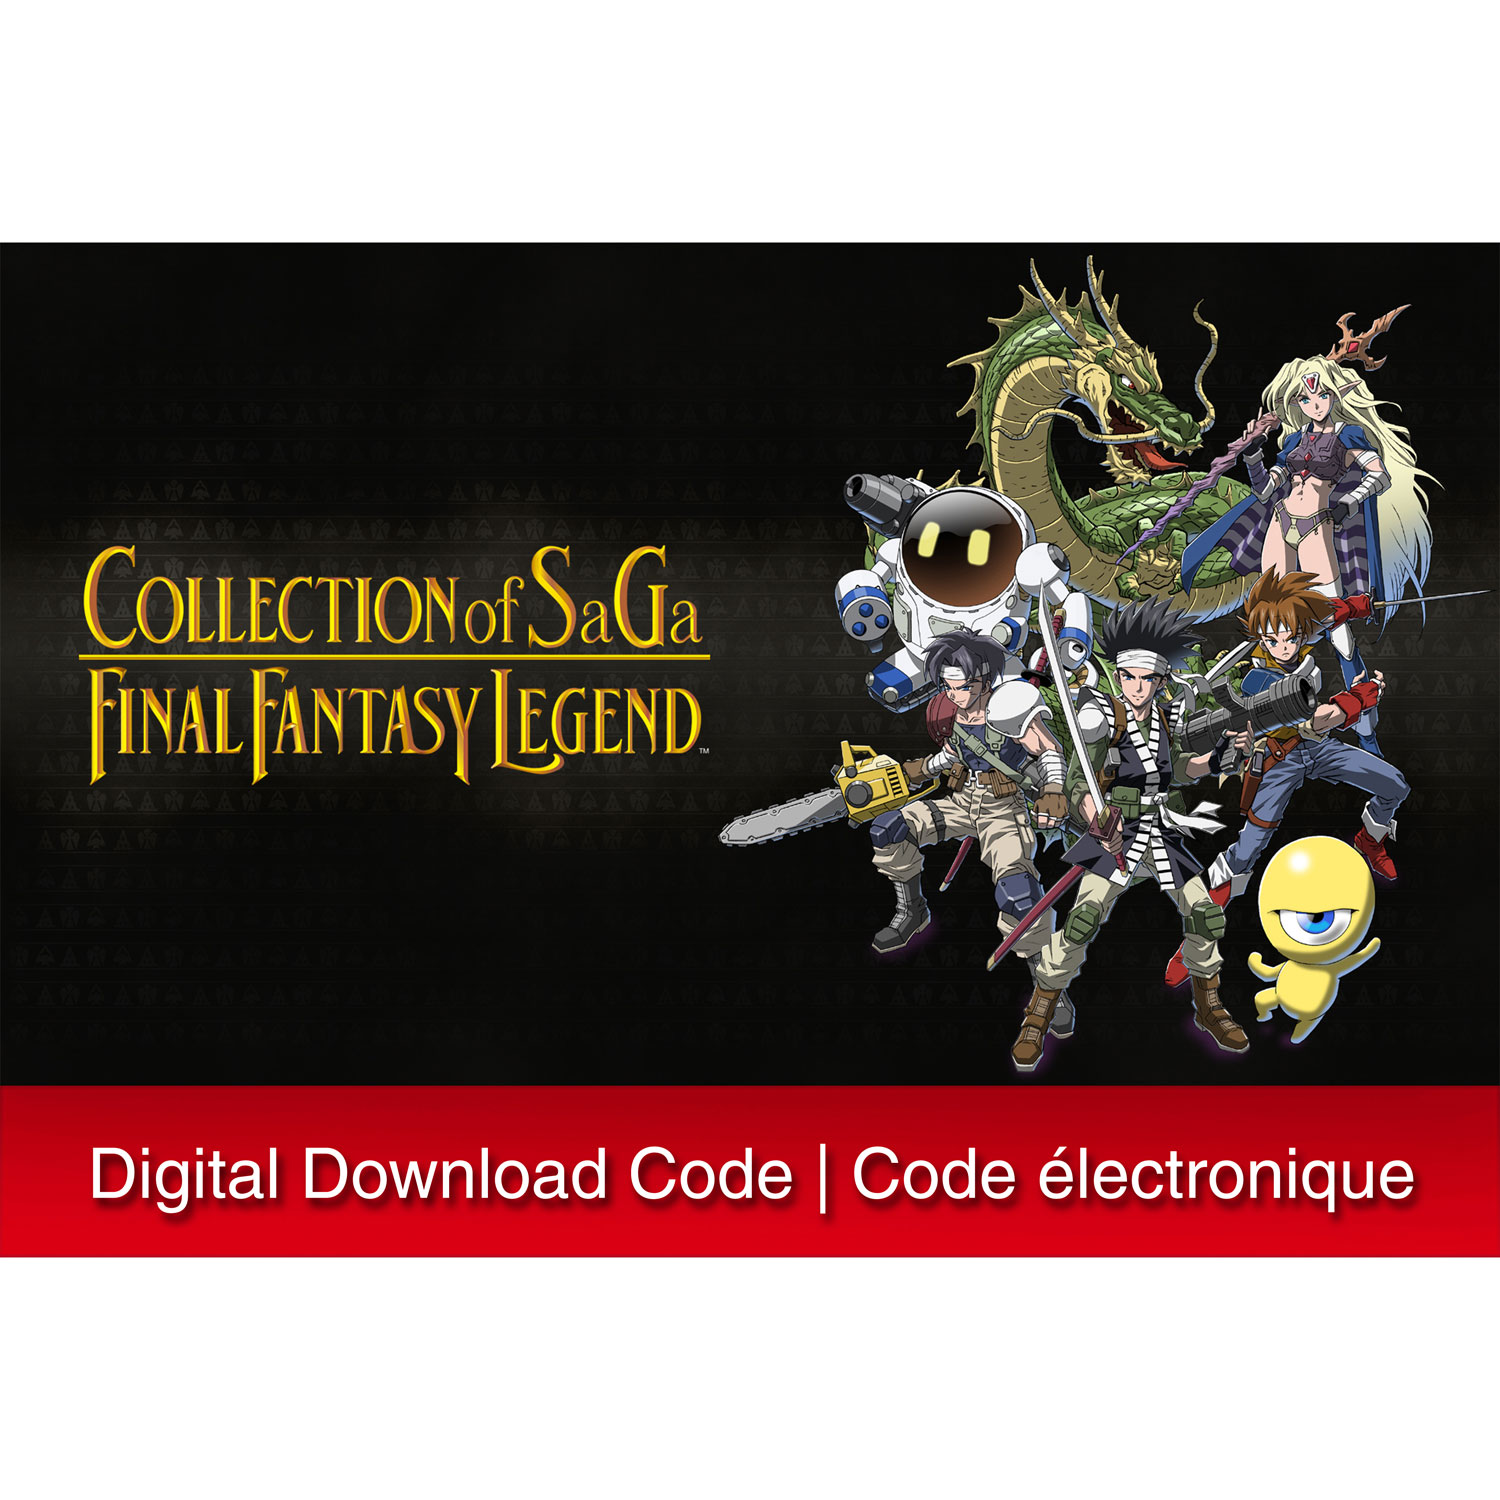 Collection of SaGa Final Fantasy Legend (Switch) - Digital Download